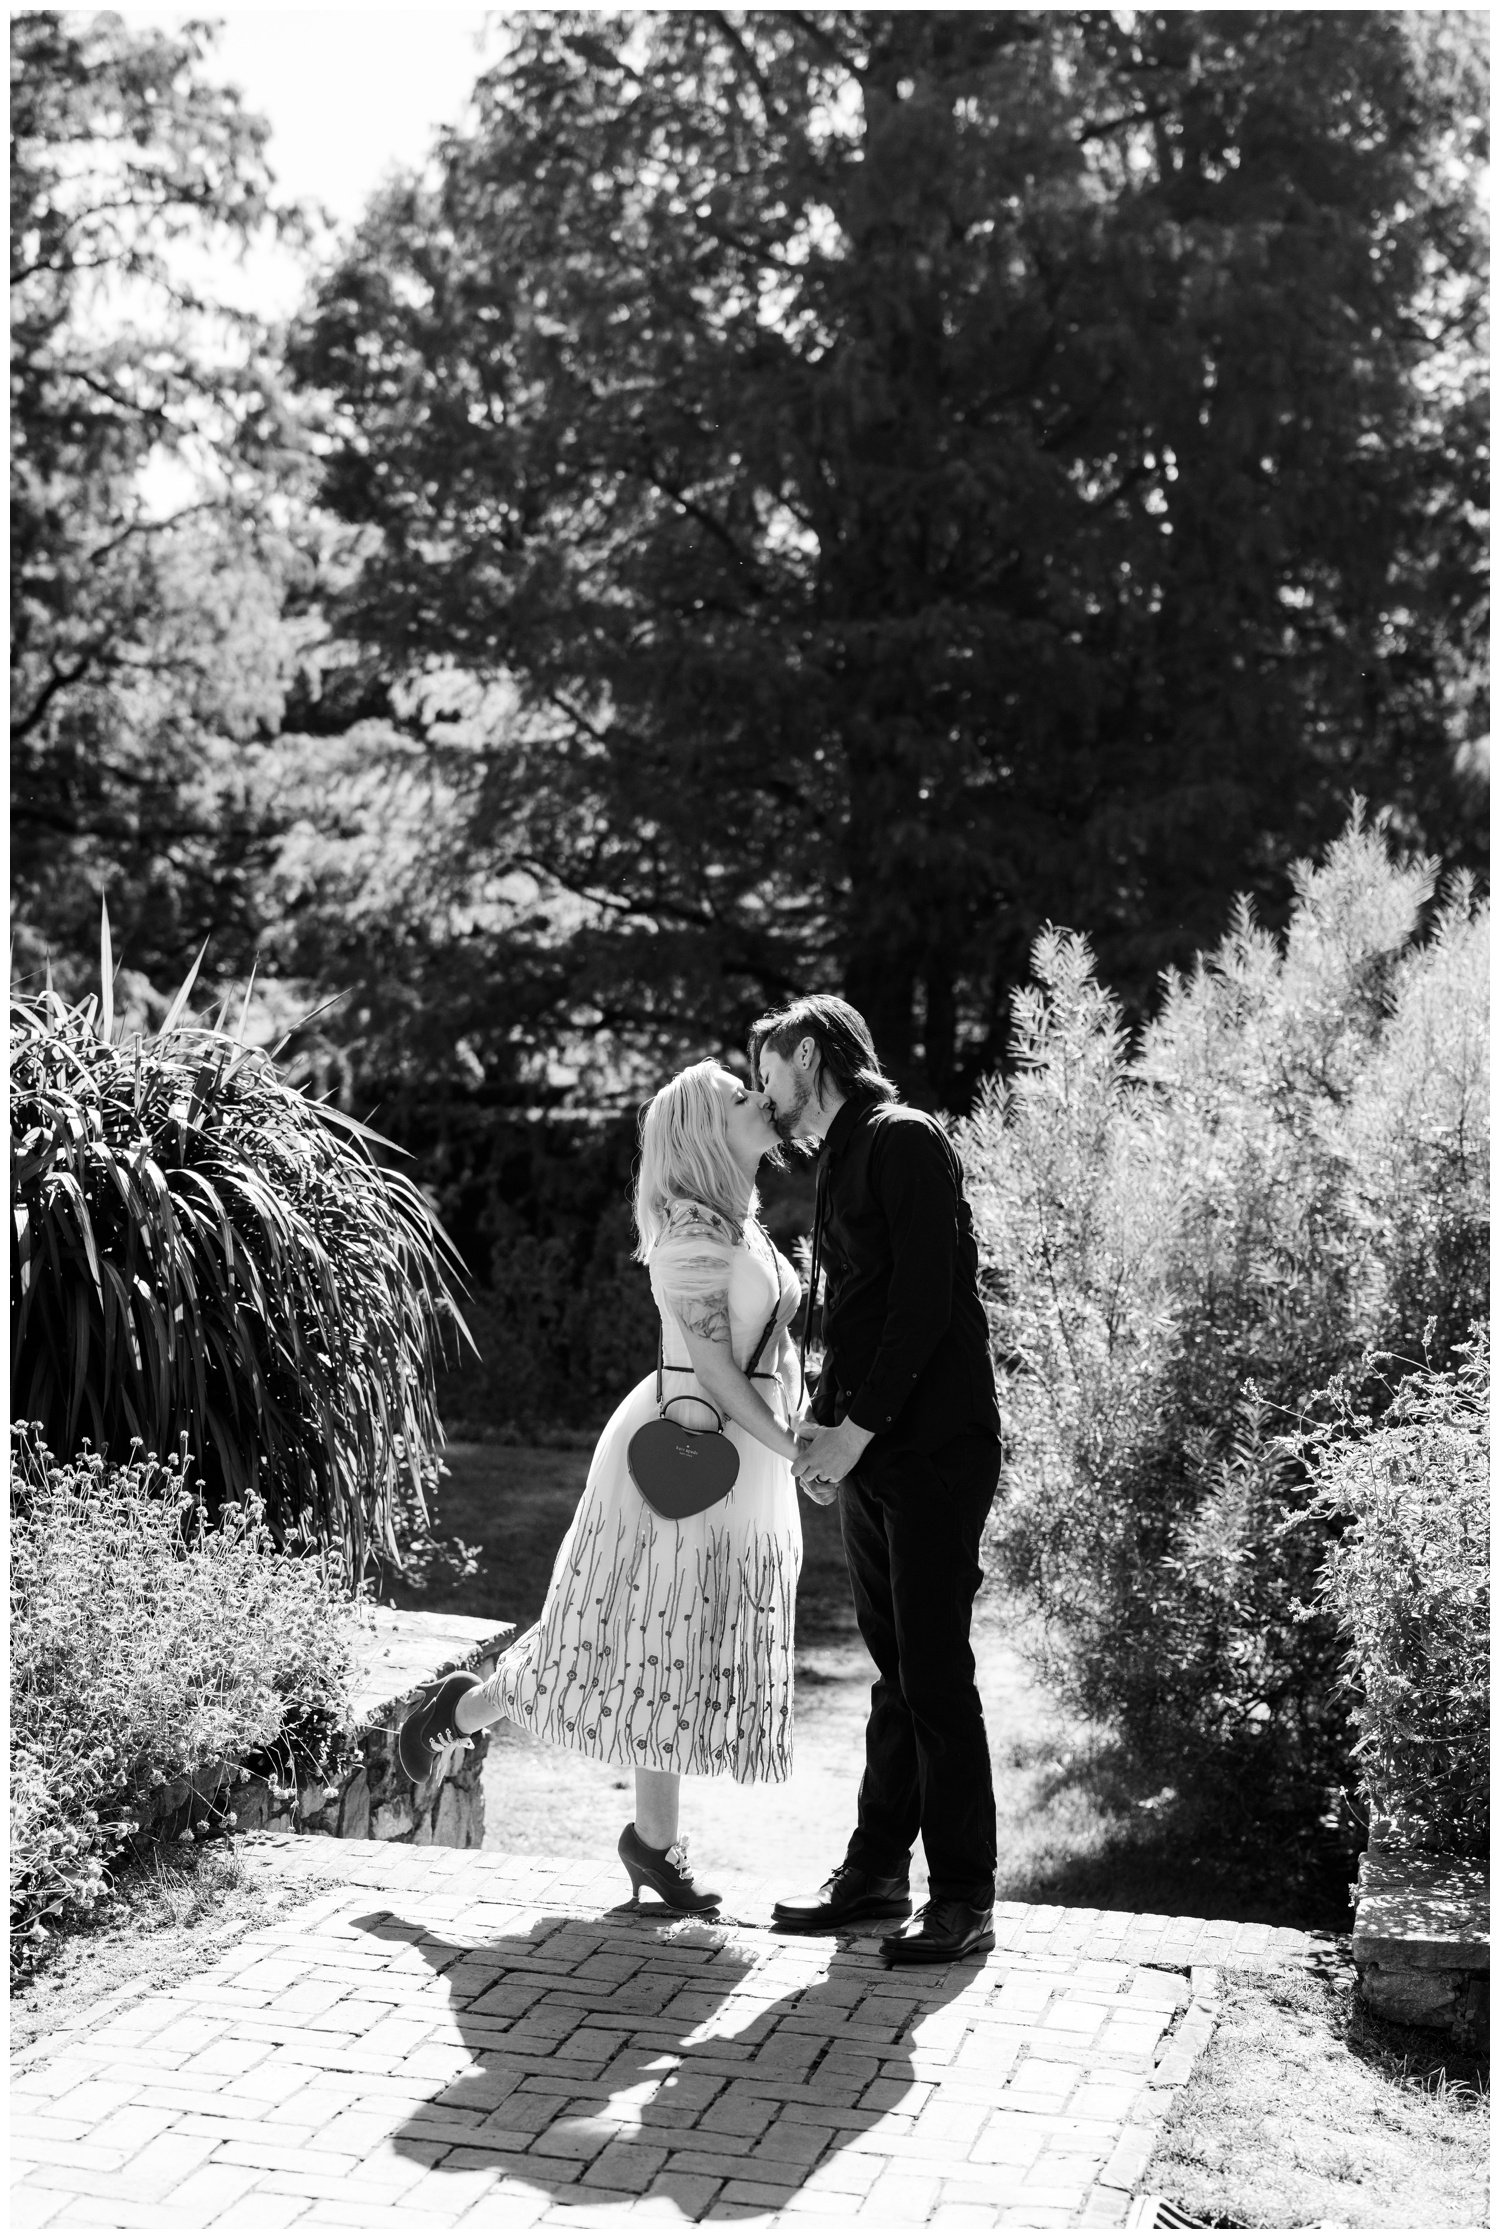 Glam-Longwood-Gardens-Summer-Engagement-Session-for-Offbeat-couple-2.jpg